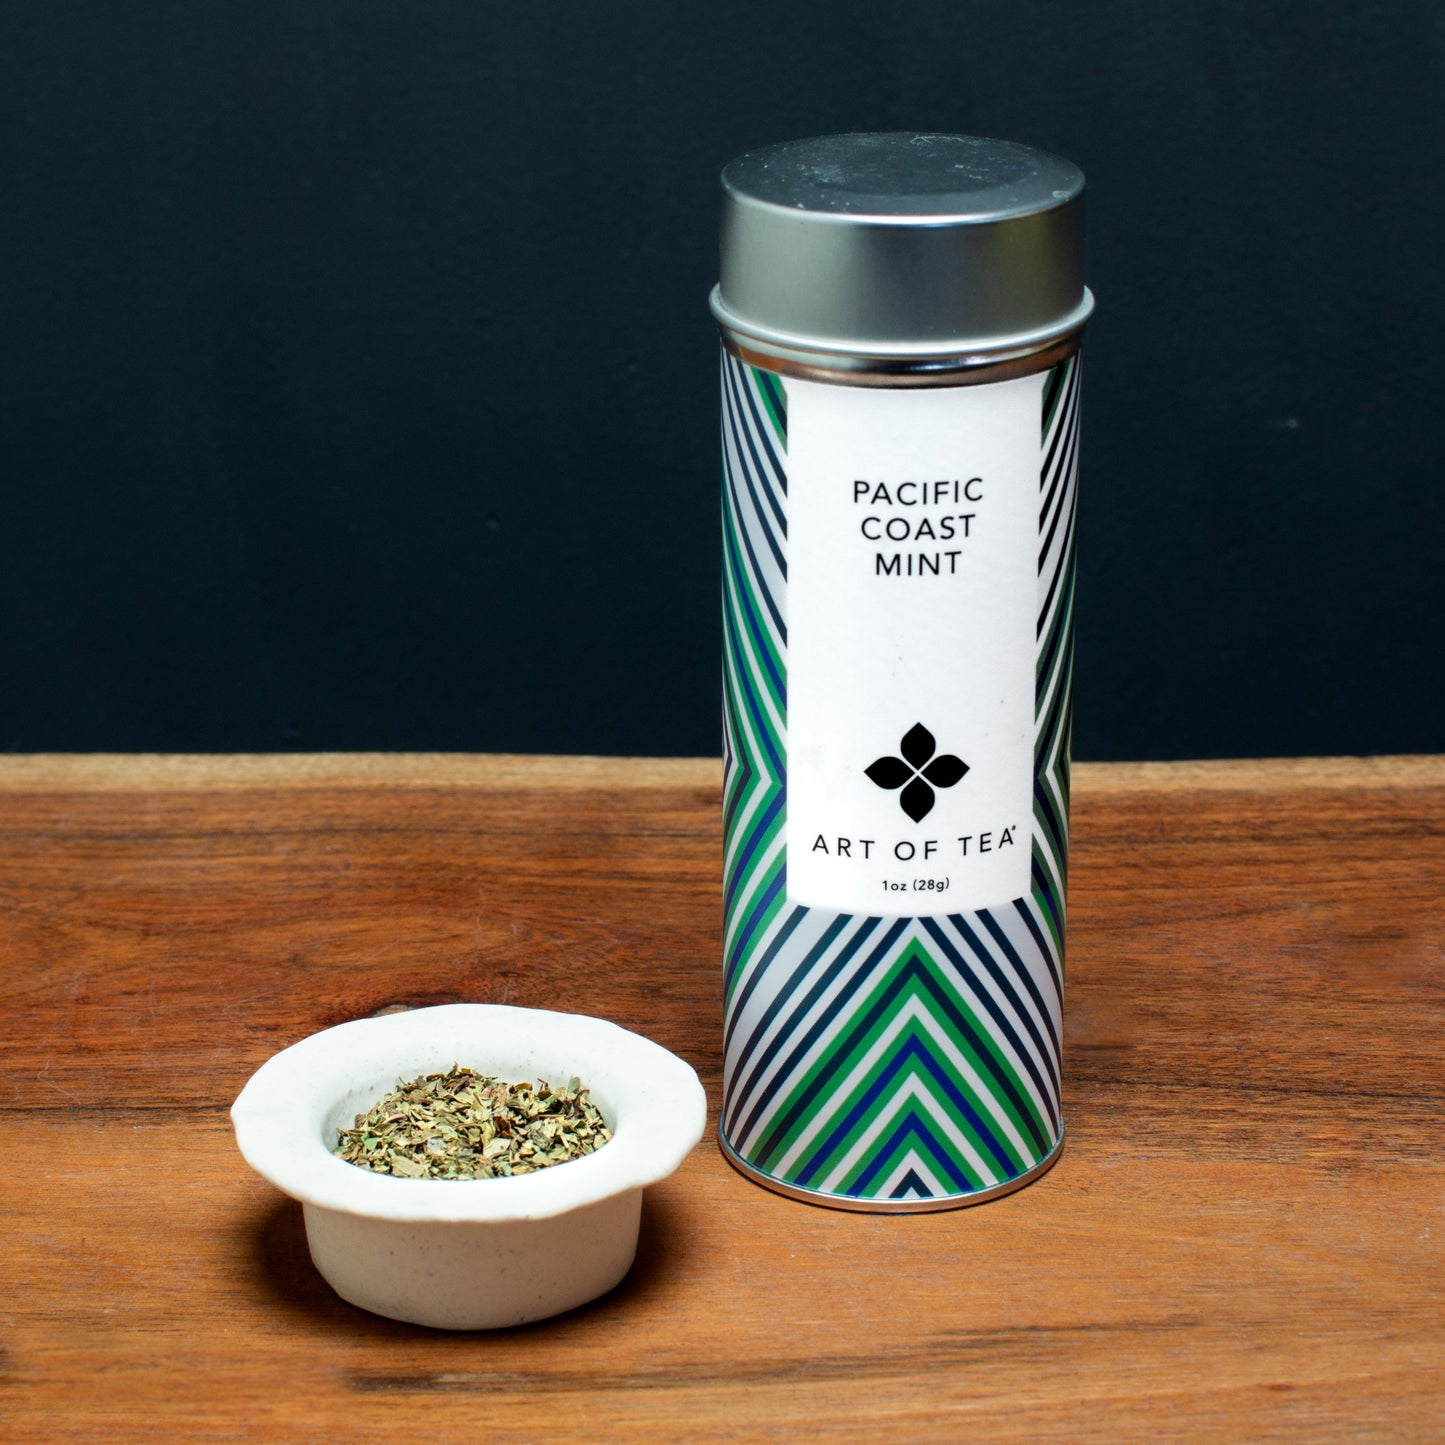 Green Glaze Small Mug, Plate, and Artisanal Tea Set